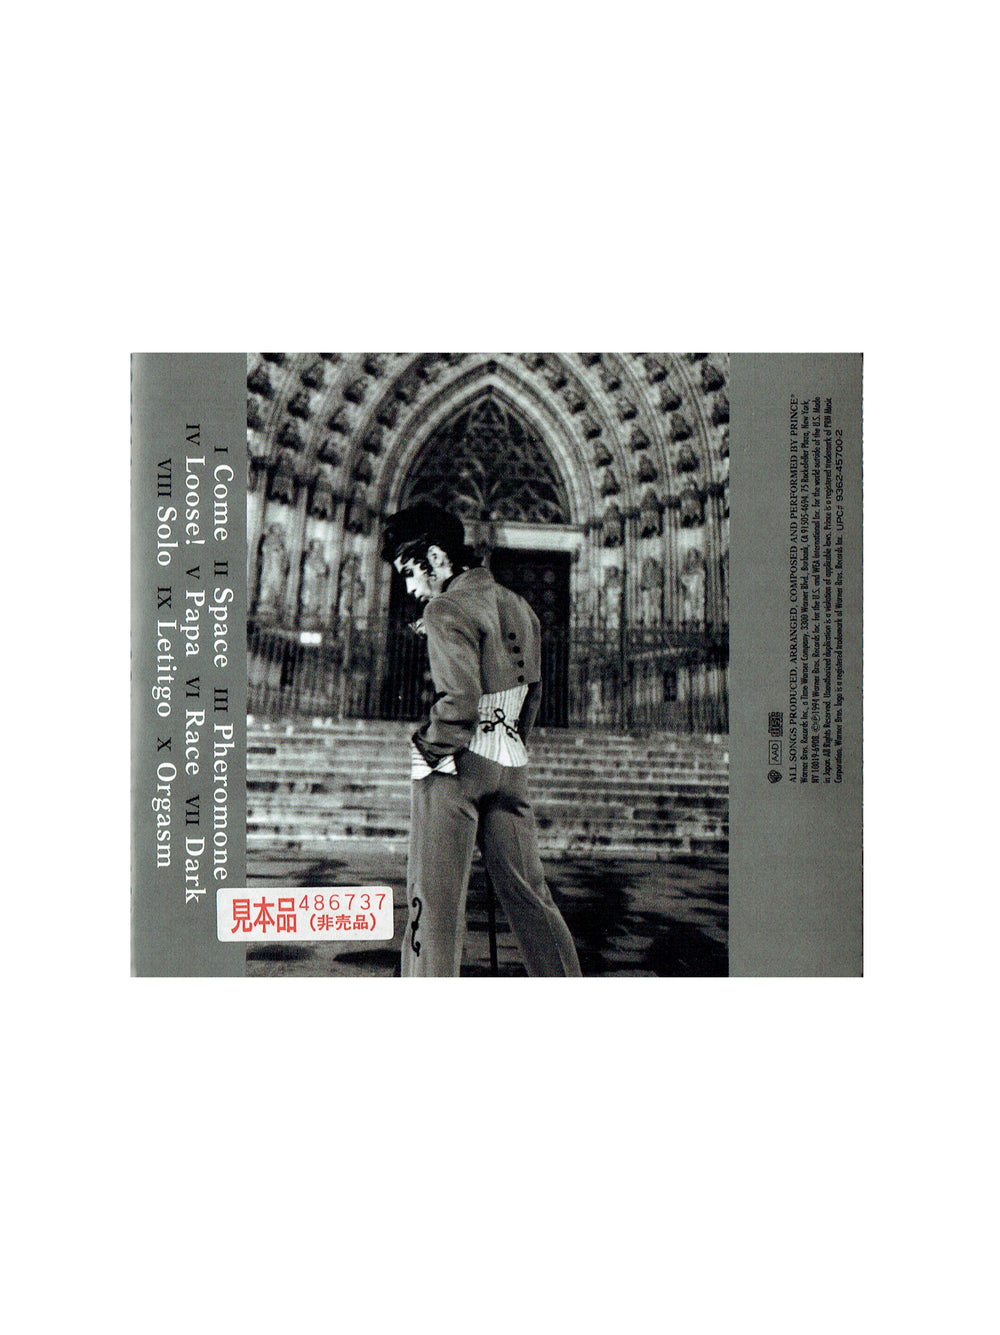 Prince – 1958 1993 Come CD Album EU PA Preloved: 1994